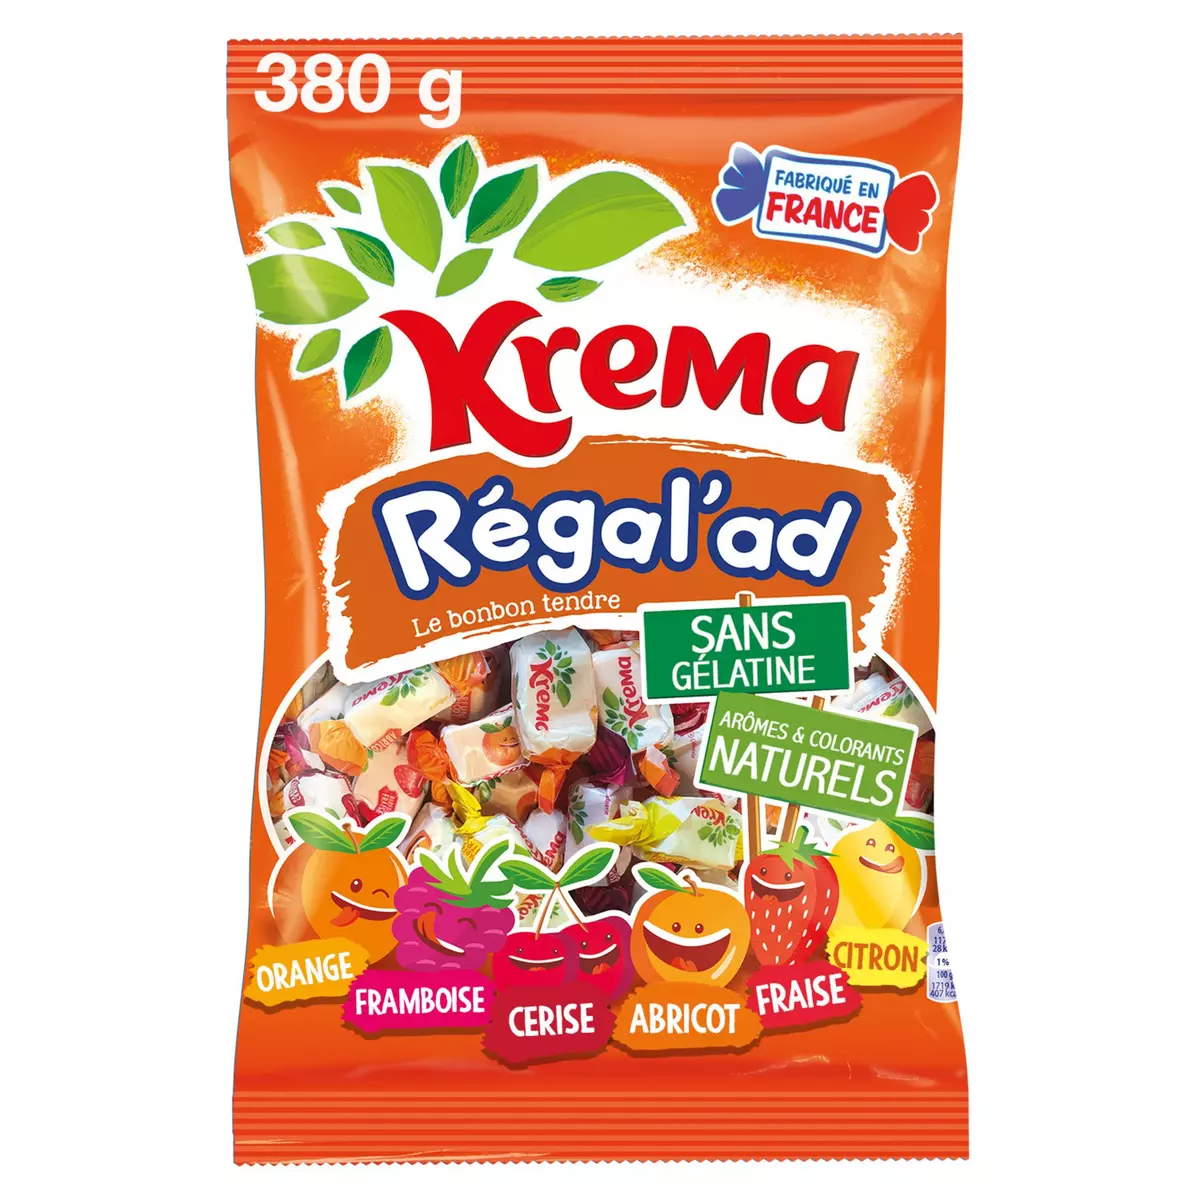 KREMA Régal'ad assortiment de bonbons tendres fruités 380g